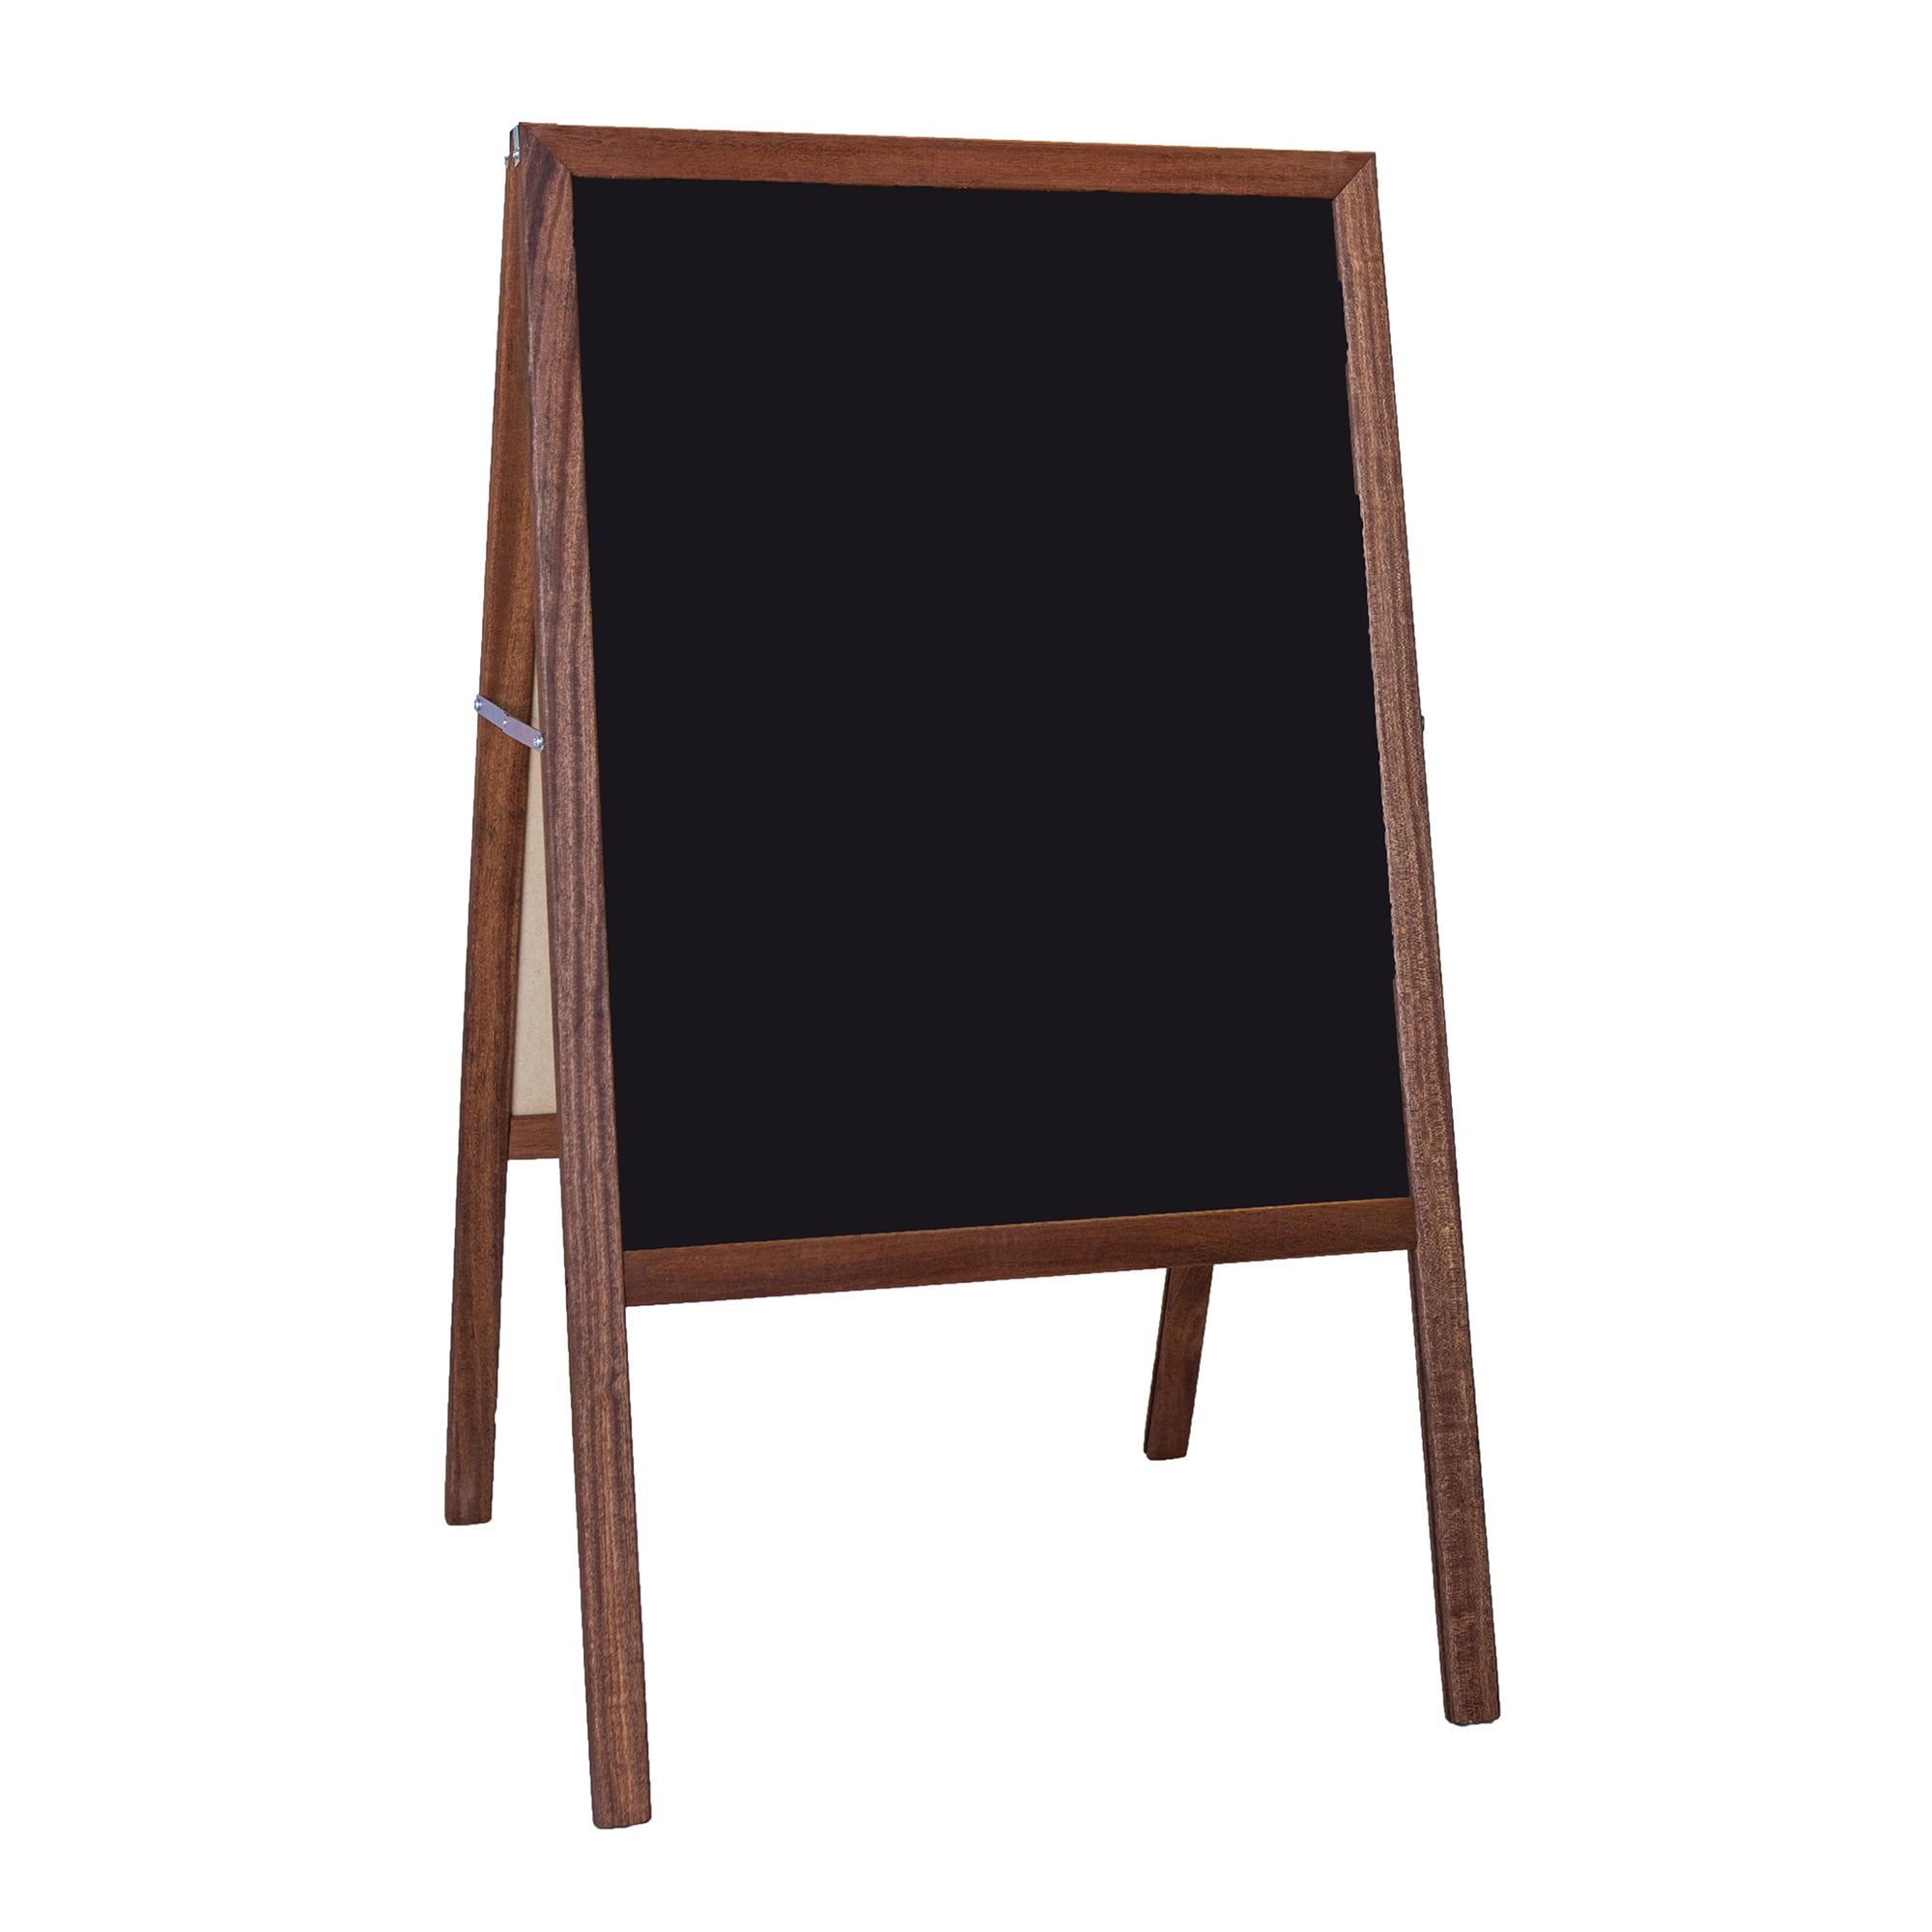 34200 Flipside Products Wood Framed Chalkboard Black 36 x 48 